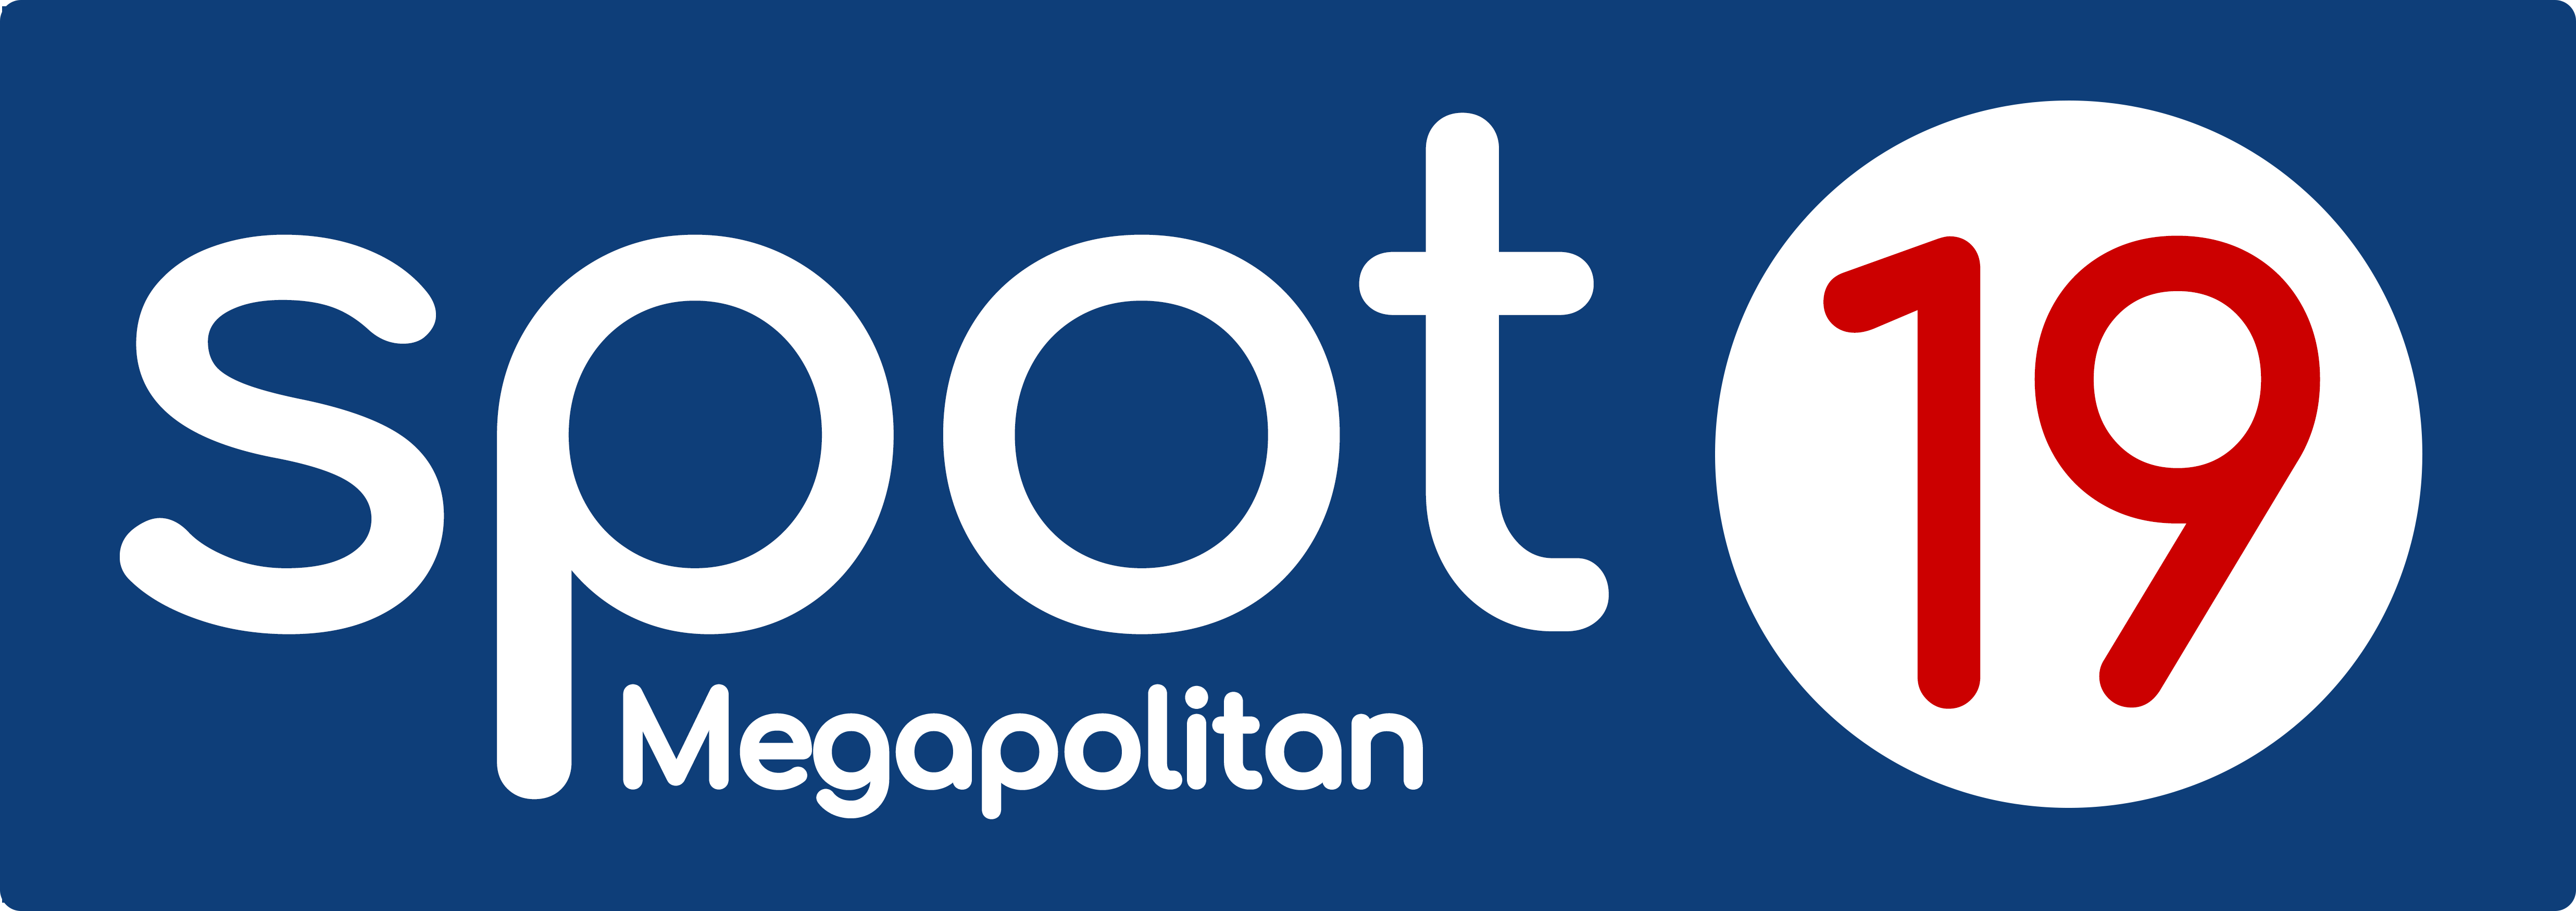 Spot19 Megapolitan Logo